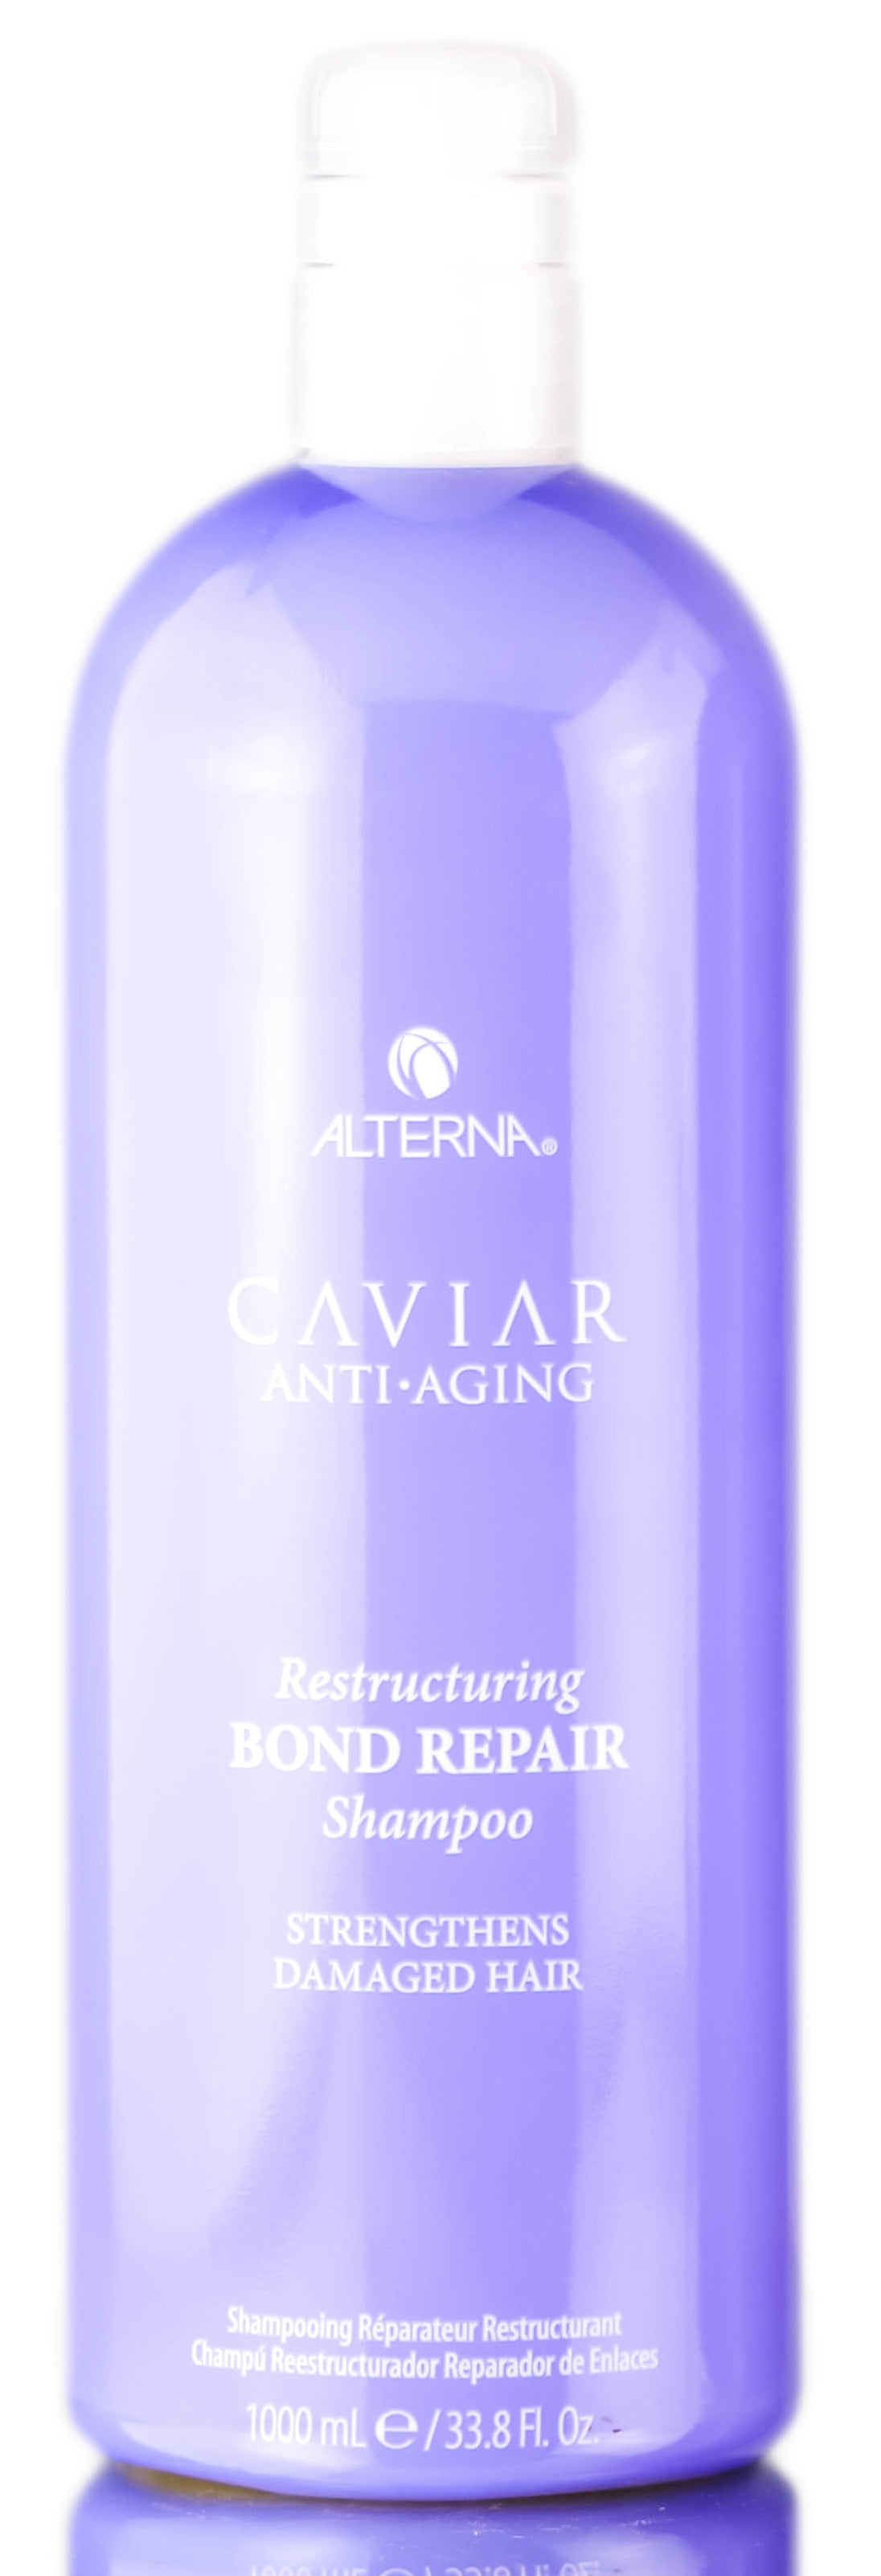 Alterna Caviar Restructuring Bond Repair Shampoo 33.8 - Walmart.com